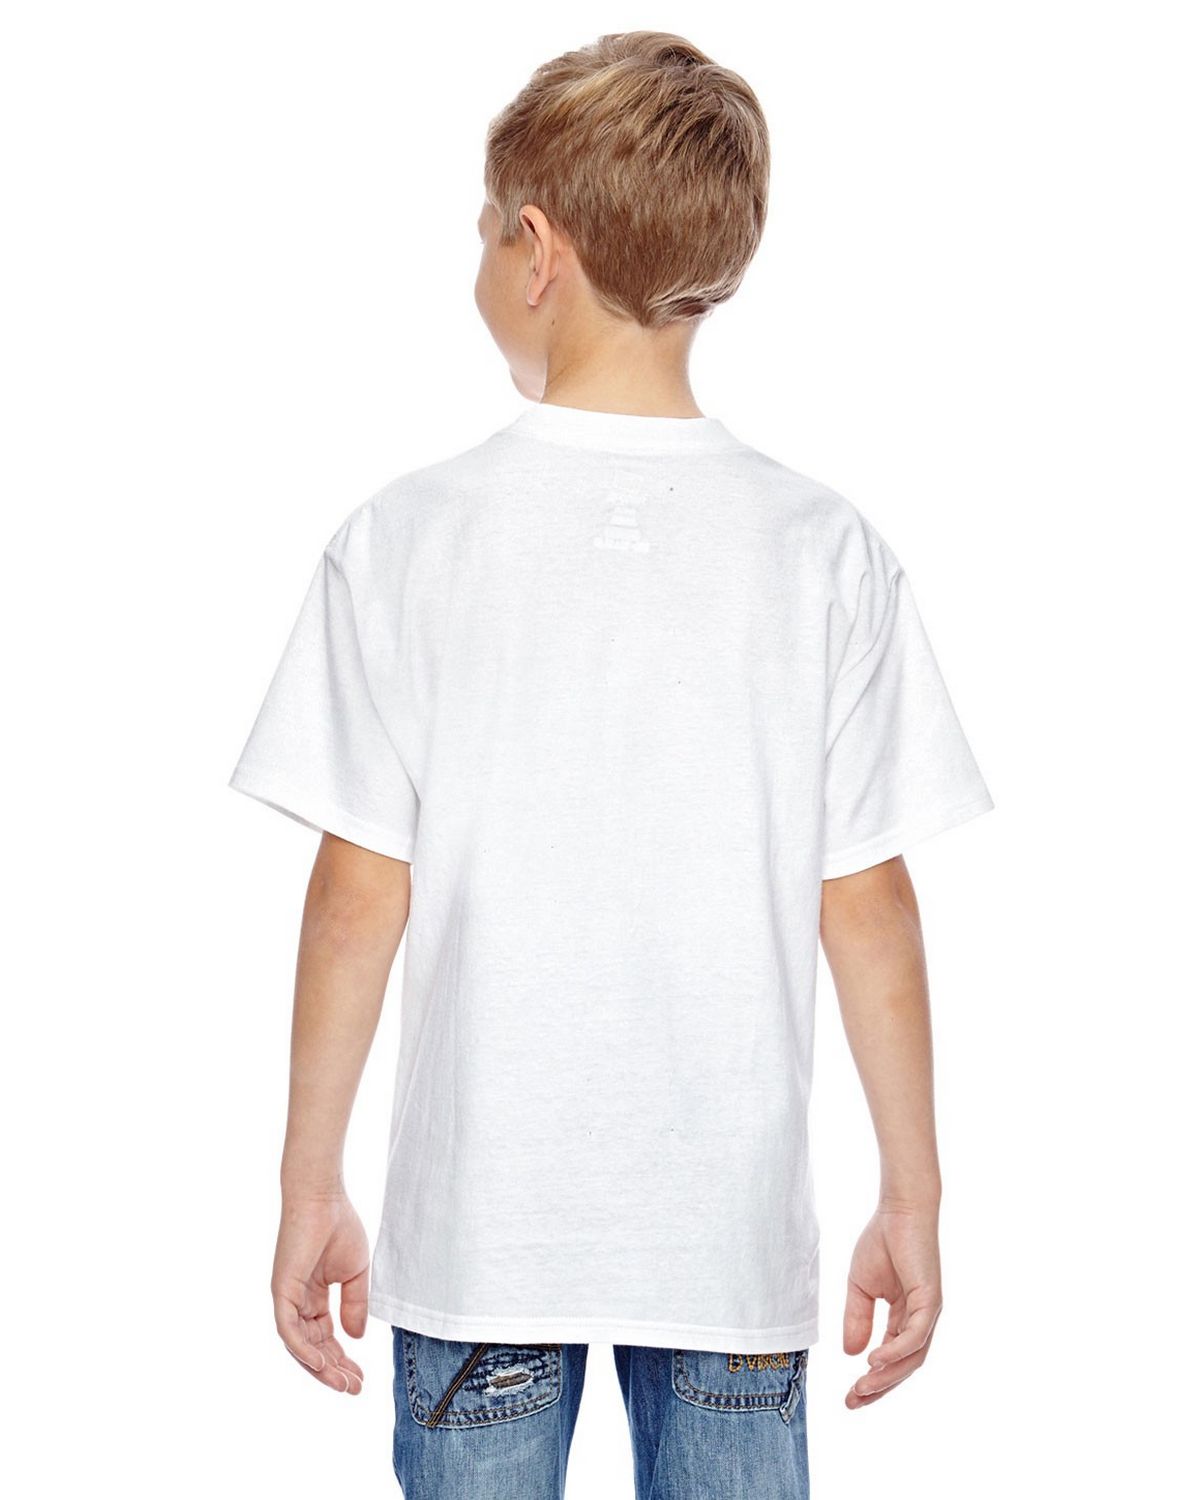 Size Chart for Hanes 498Y Youth 4.5 oz. 100% Ringspun Cotton Nano T-Shirt